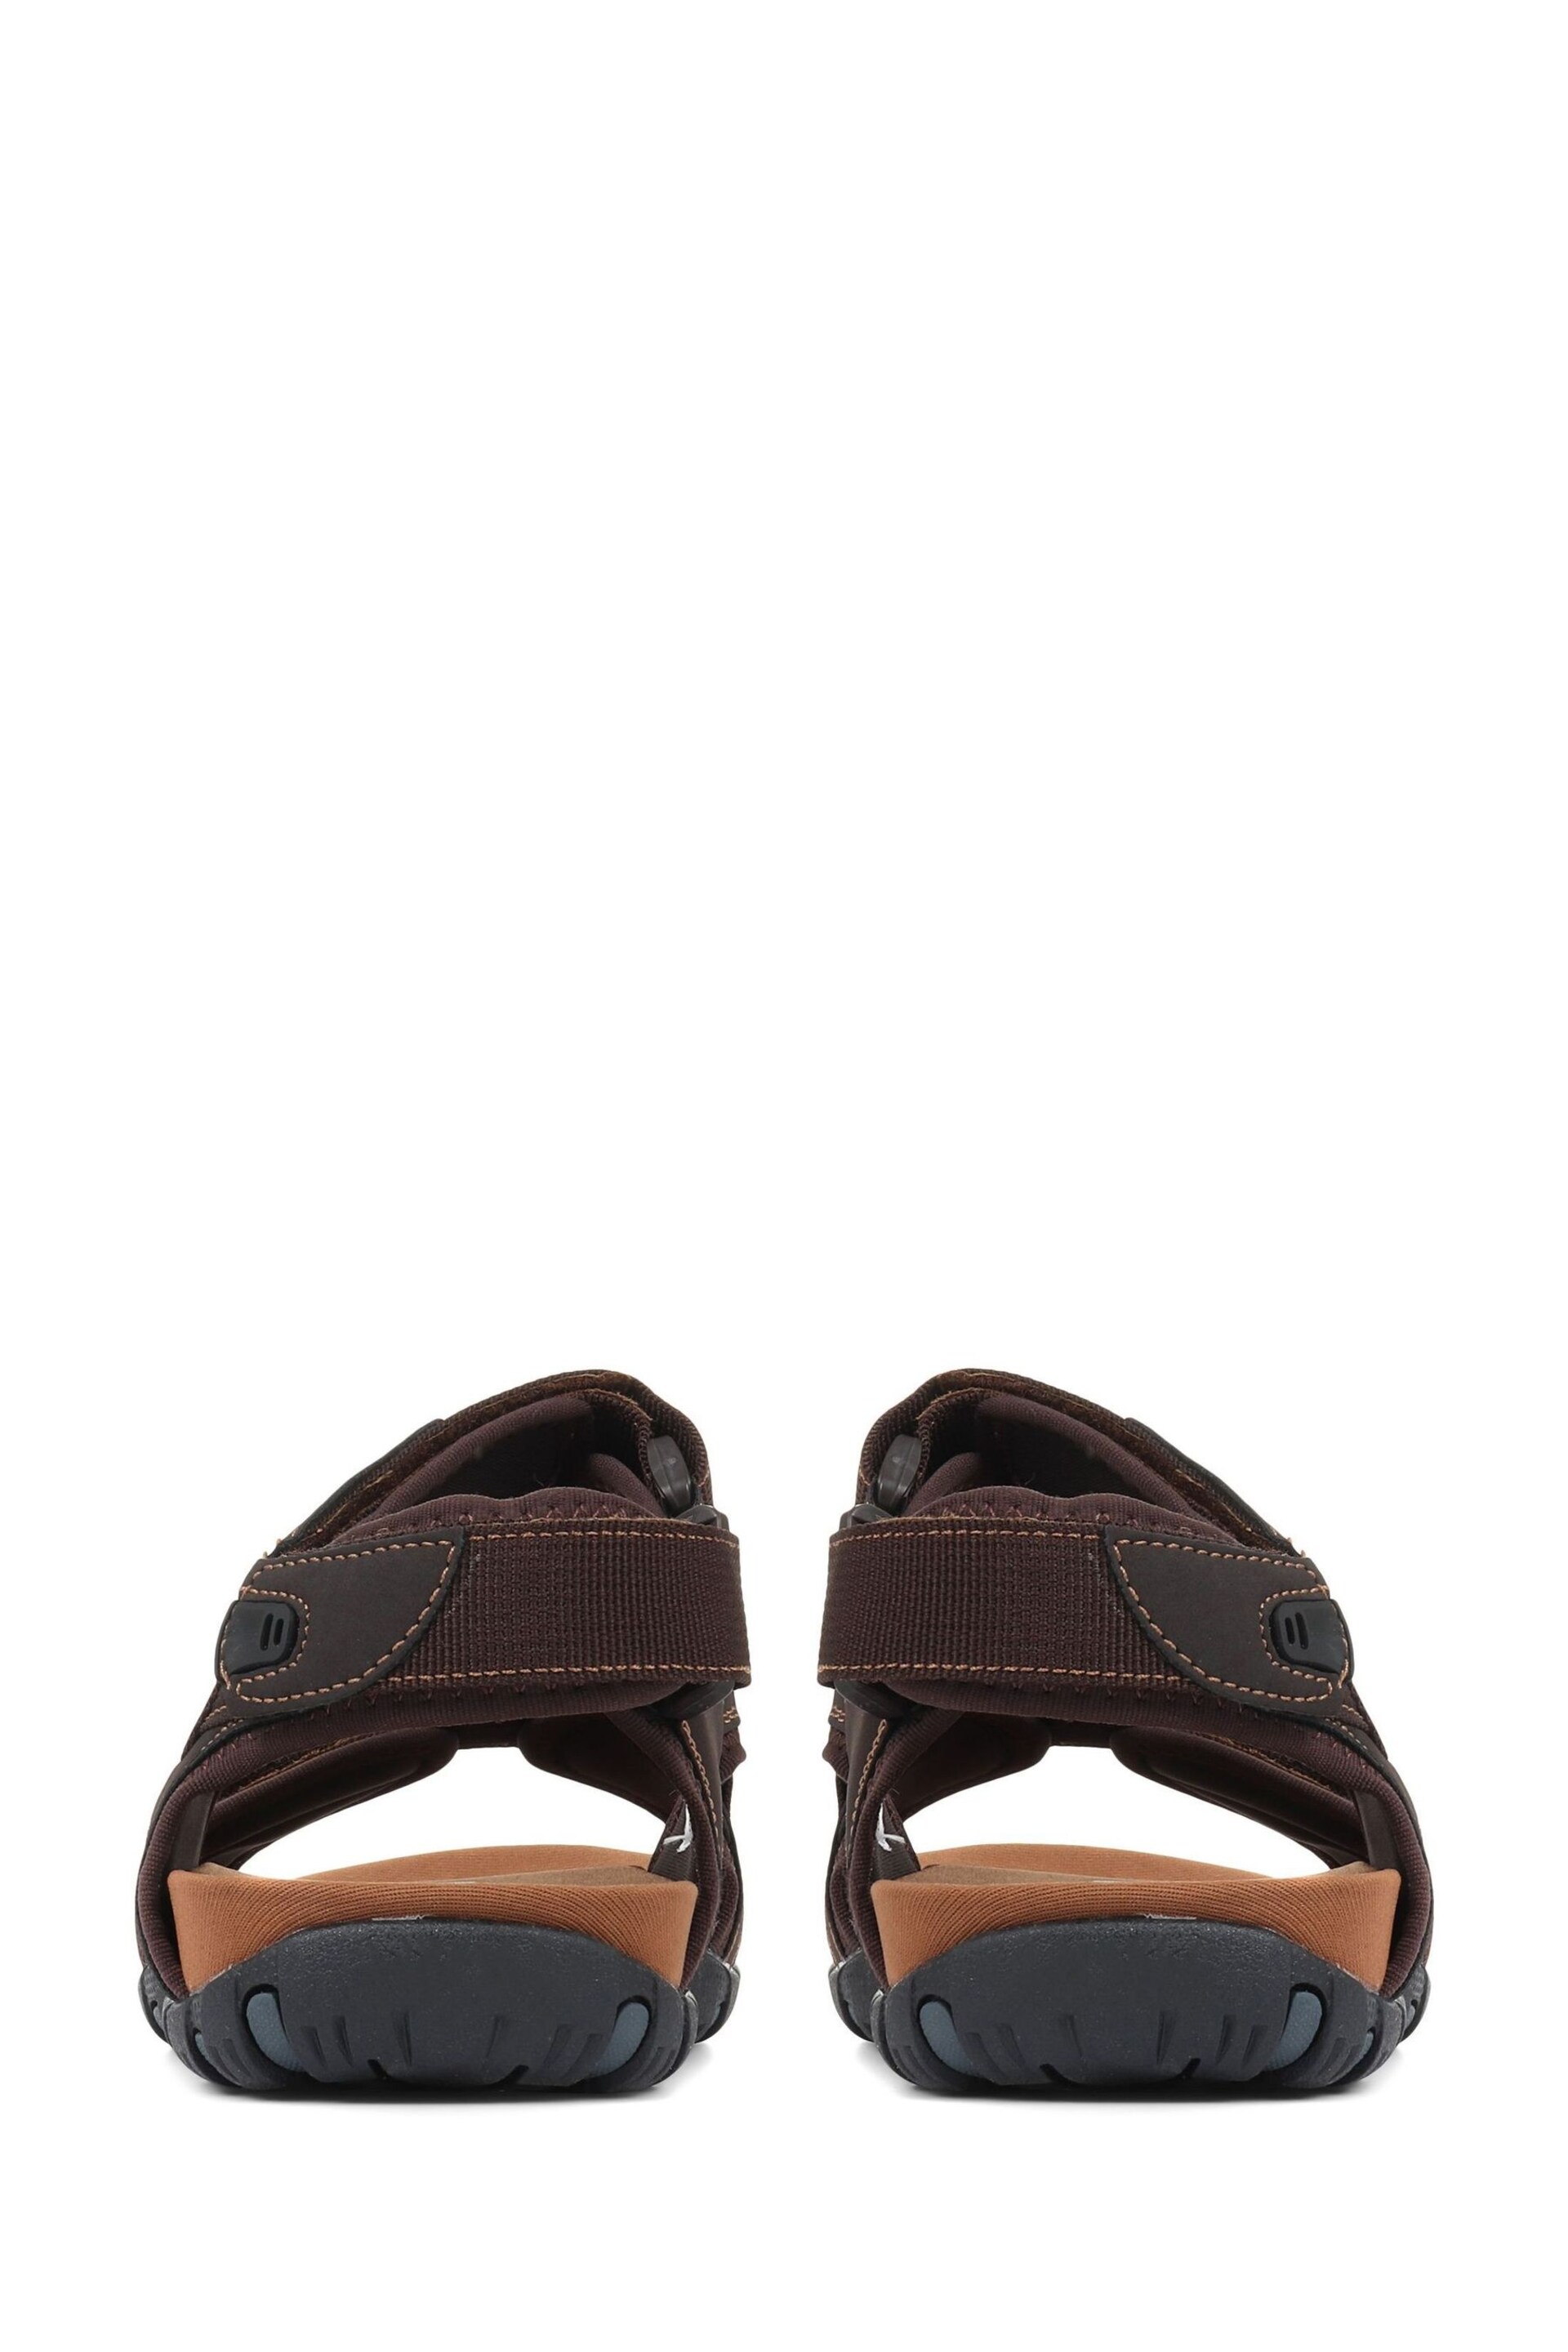 Pavers Fully Adjustable Walking Brown Sandals - Image 4 of 5